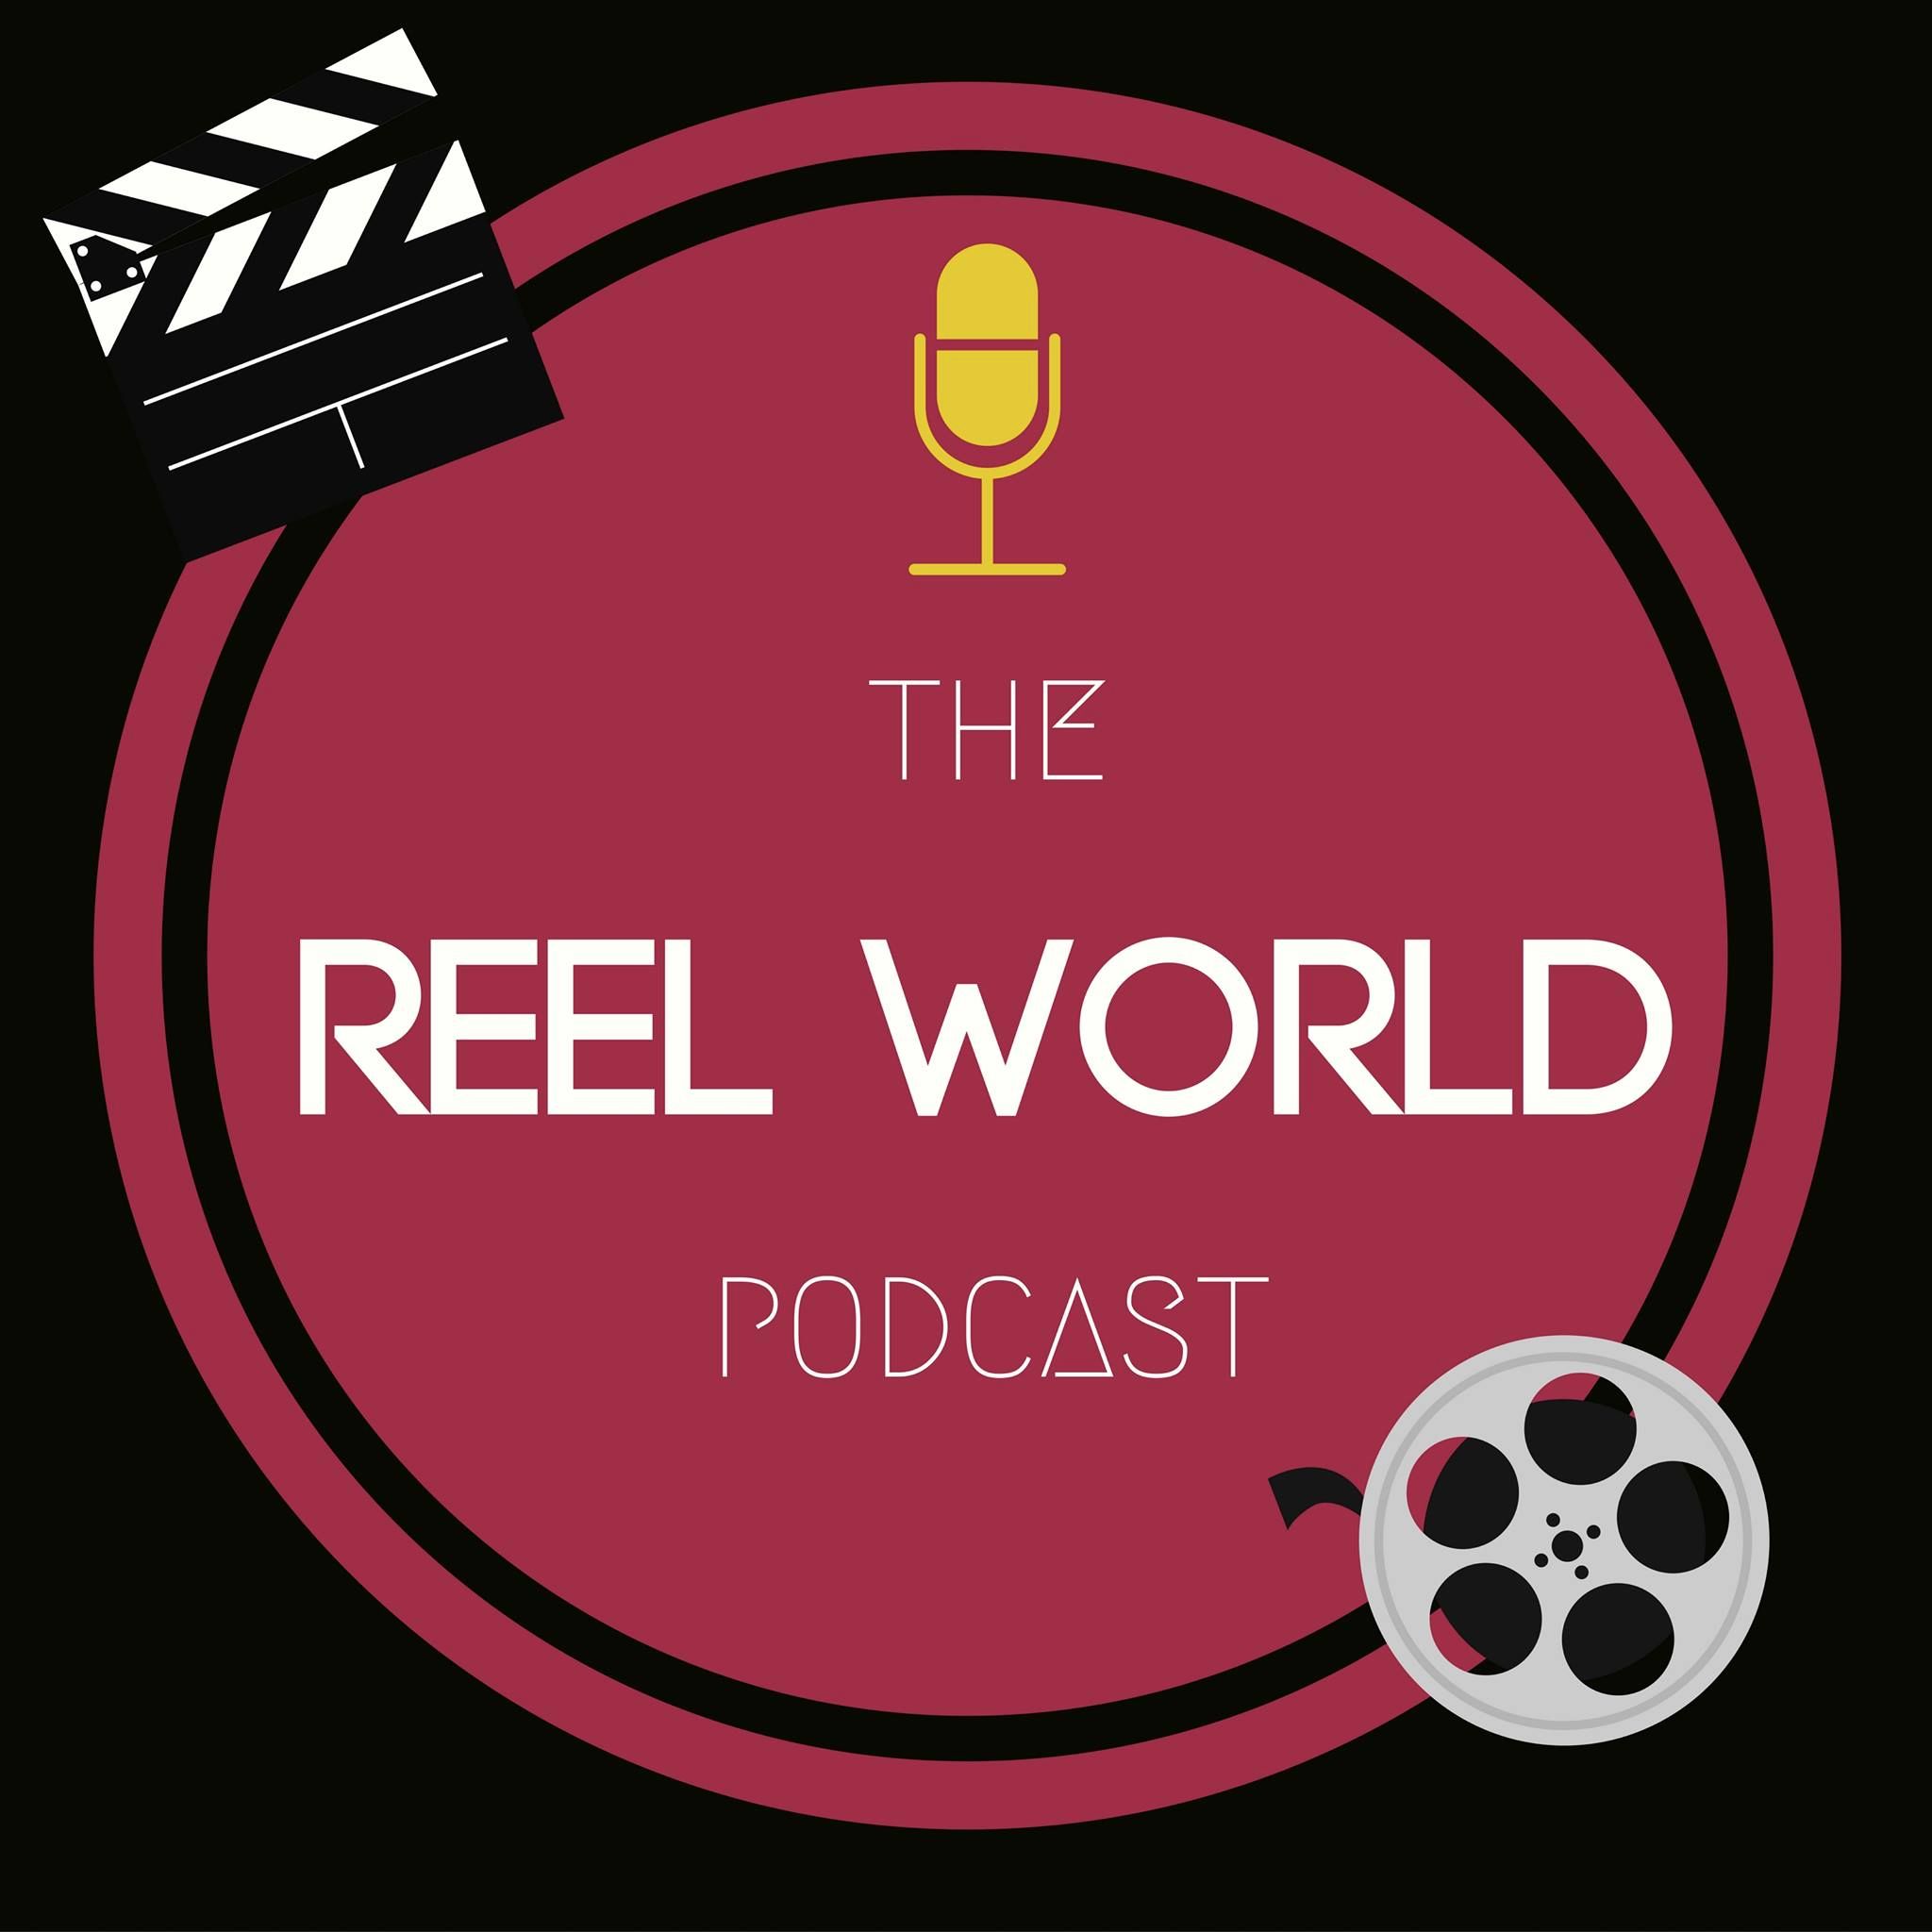 Artwork for podcast The Reel World Podcast